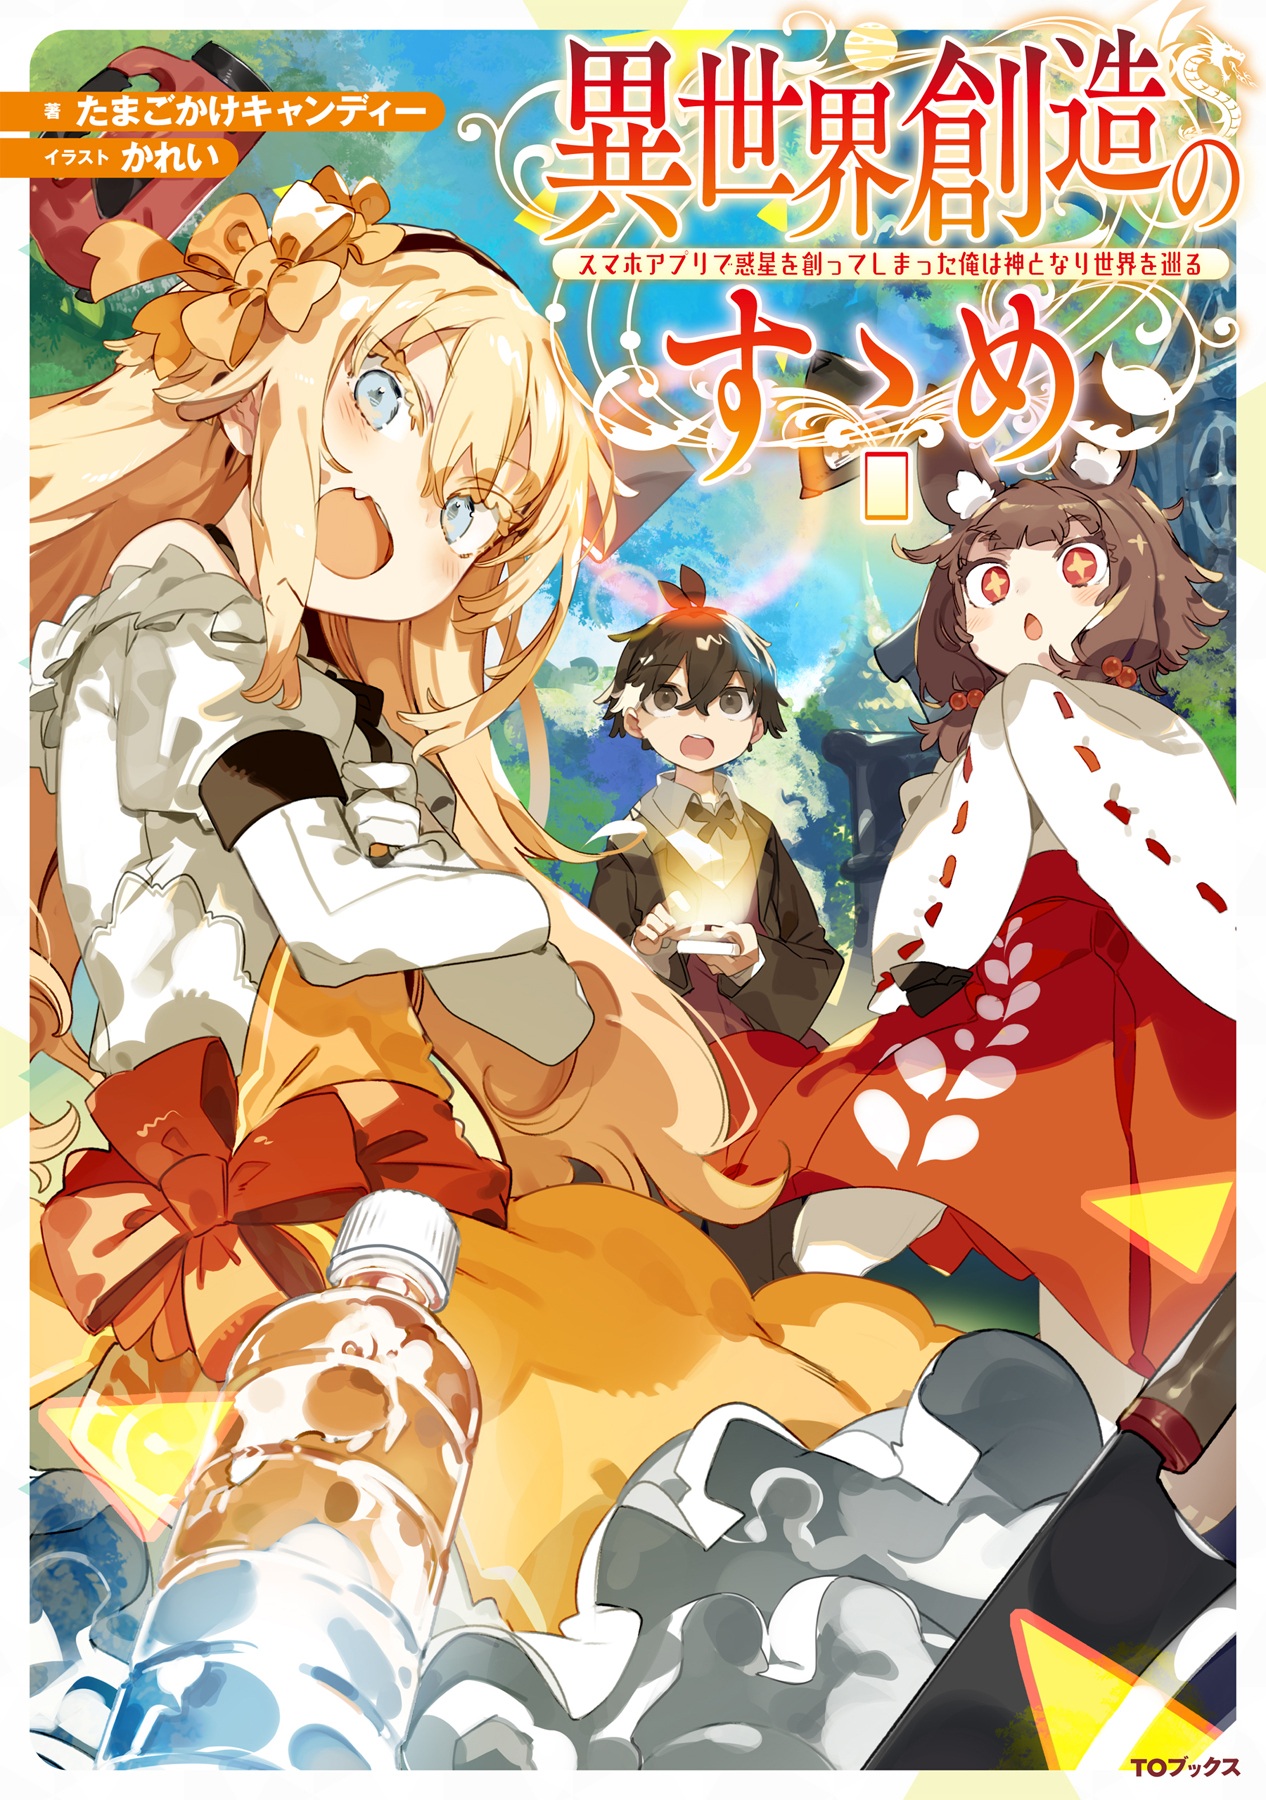 Manga Mogura RE on X: A 2nd Anime Season for In Another World With My  Smartphone has just been announced (Isekai wa Smartphone to Tomo ni)  English LN release @jnovelclub English manga